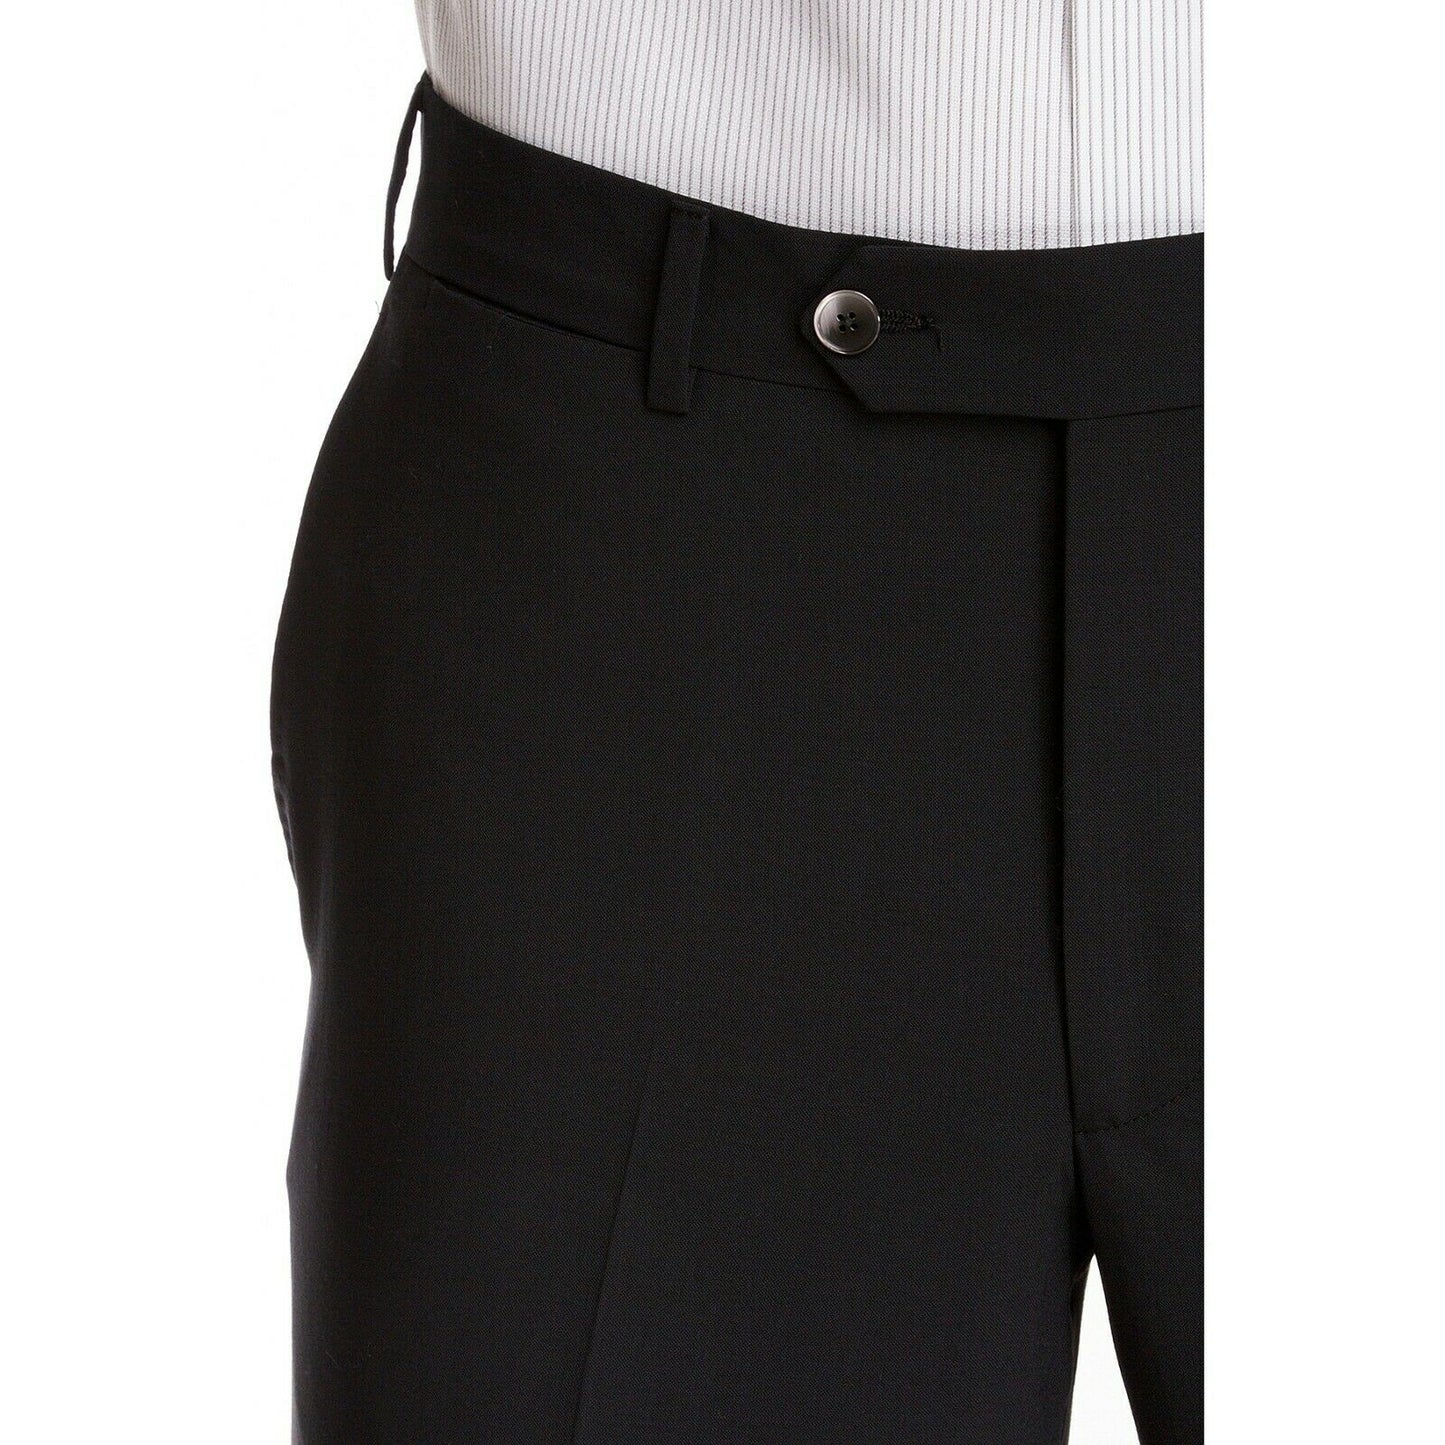 Ike Behar Mens Wool Flat Front Dress Suit Slacks Pants Black 38 NWT